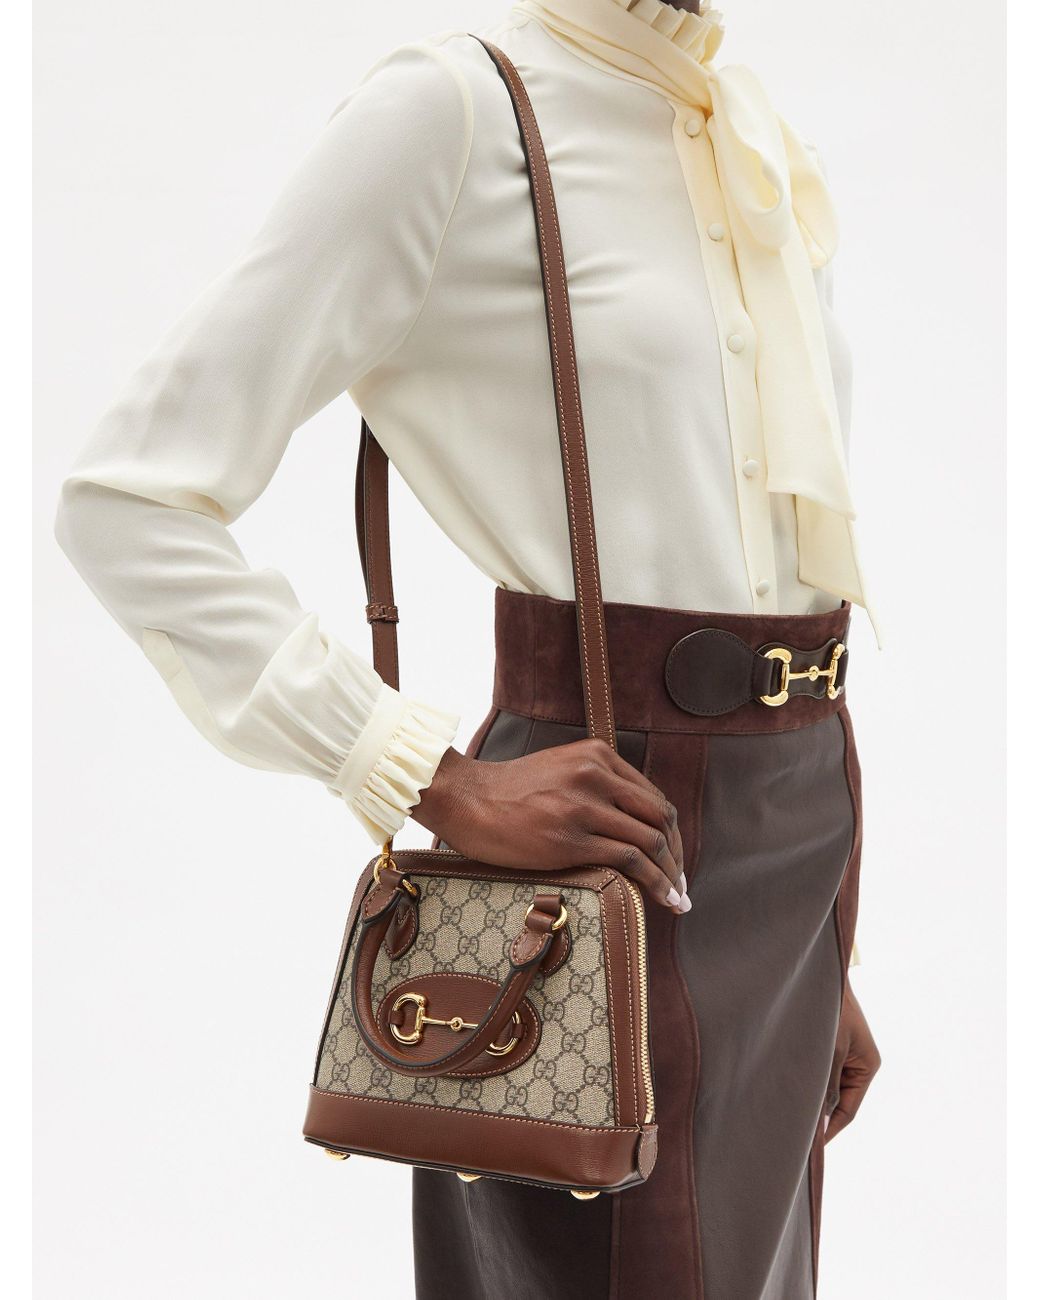 Horsebit 1955 Mini GG Canvas Shoulder Bag in Brown - Gucci